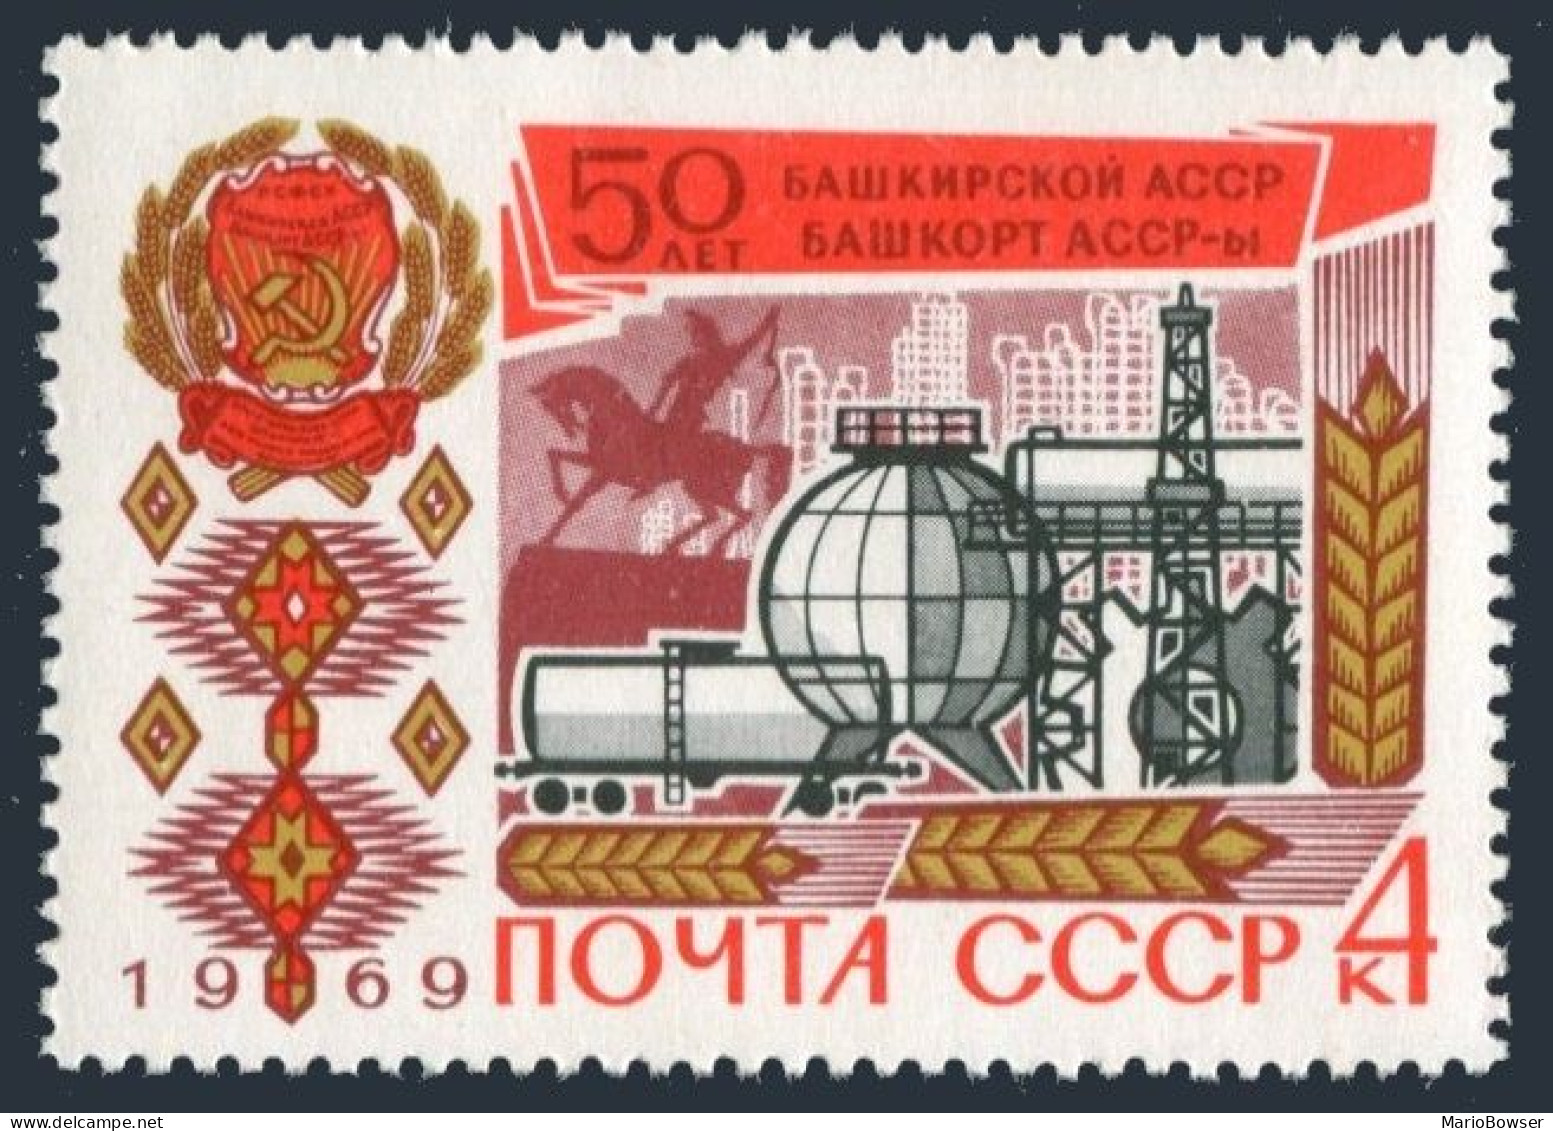 Russia 3577 2 Stamps,MNH. Mi 3604. Bashkir Republic, 50th Ann.1969. Oil Refinery - Neufs